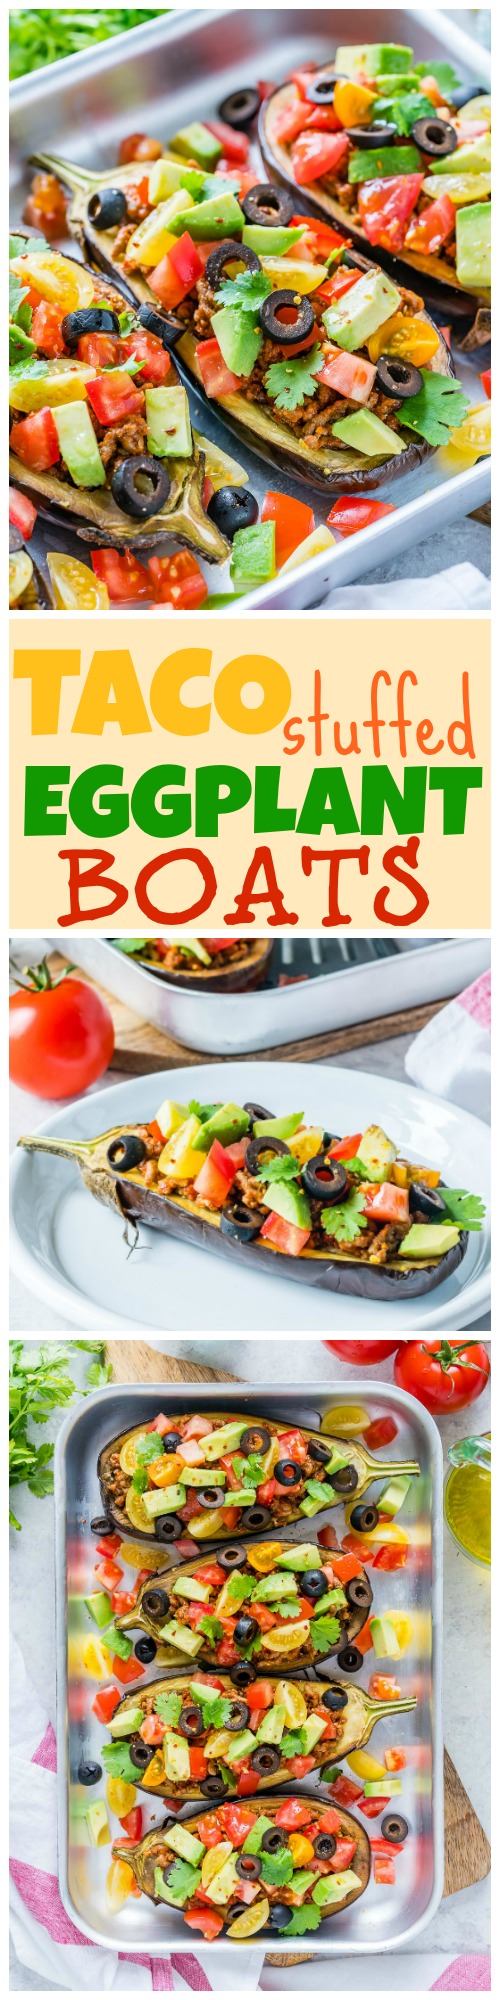 Eggplant Boats Staffed with Taco Salad